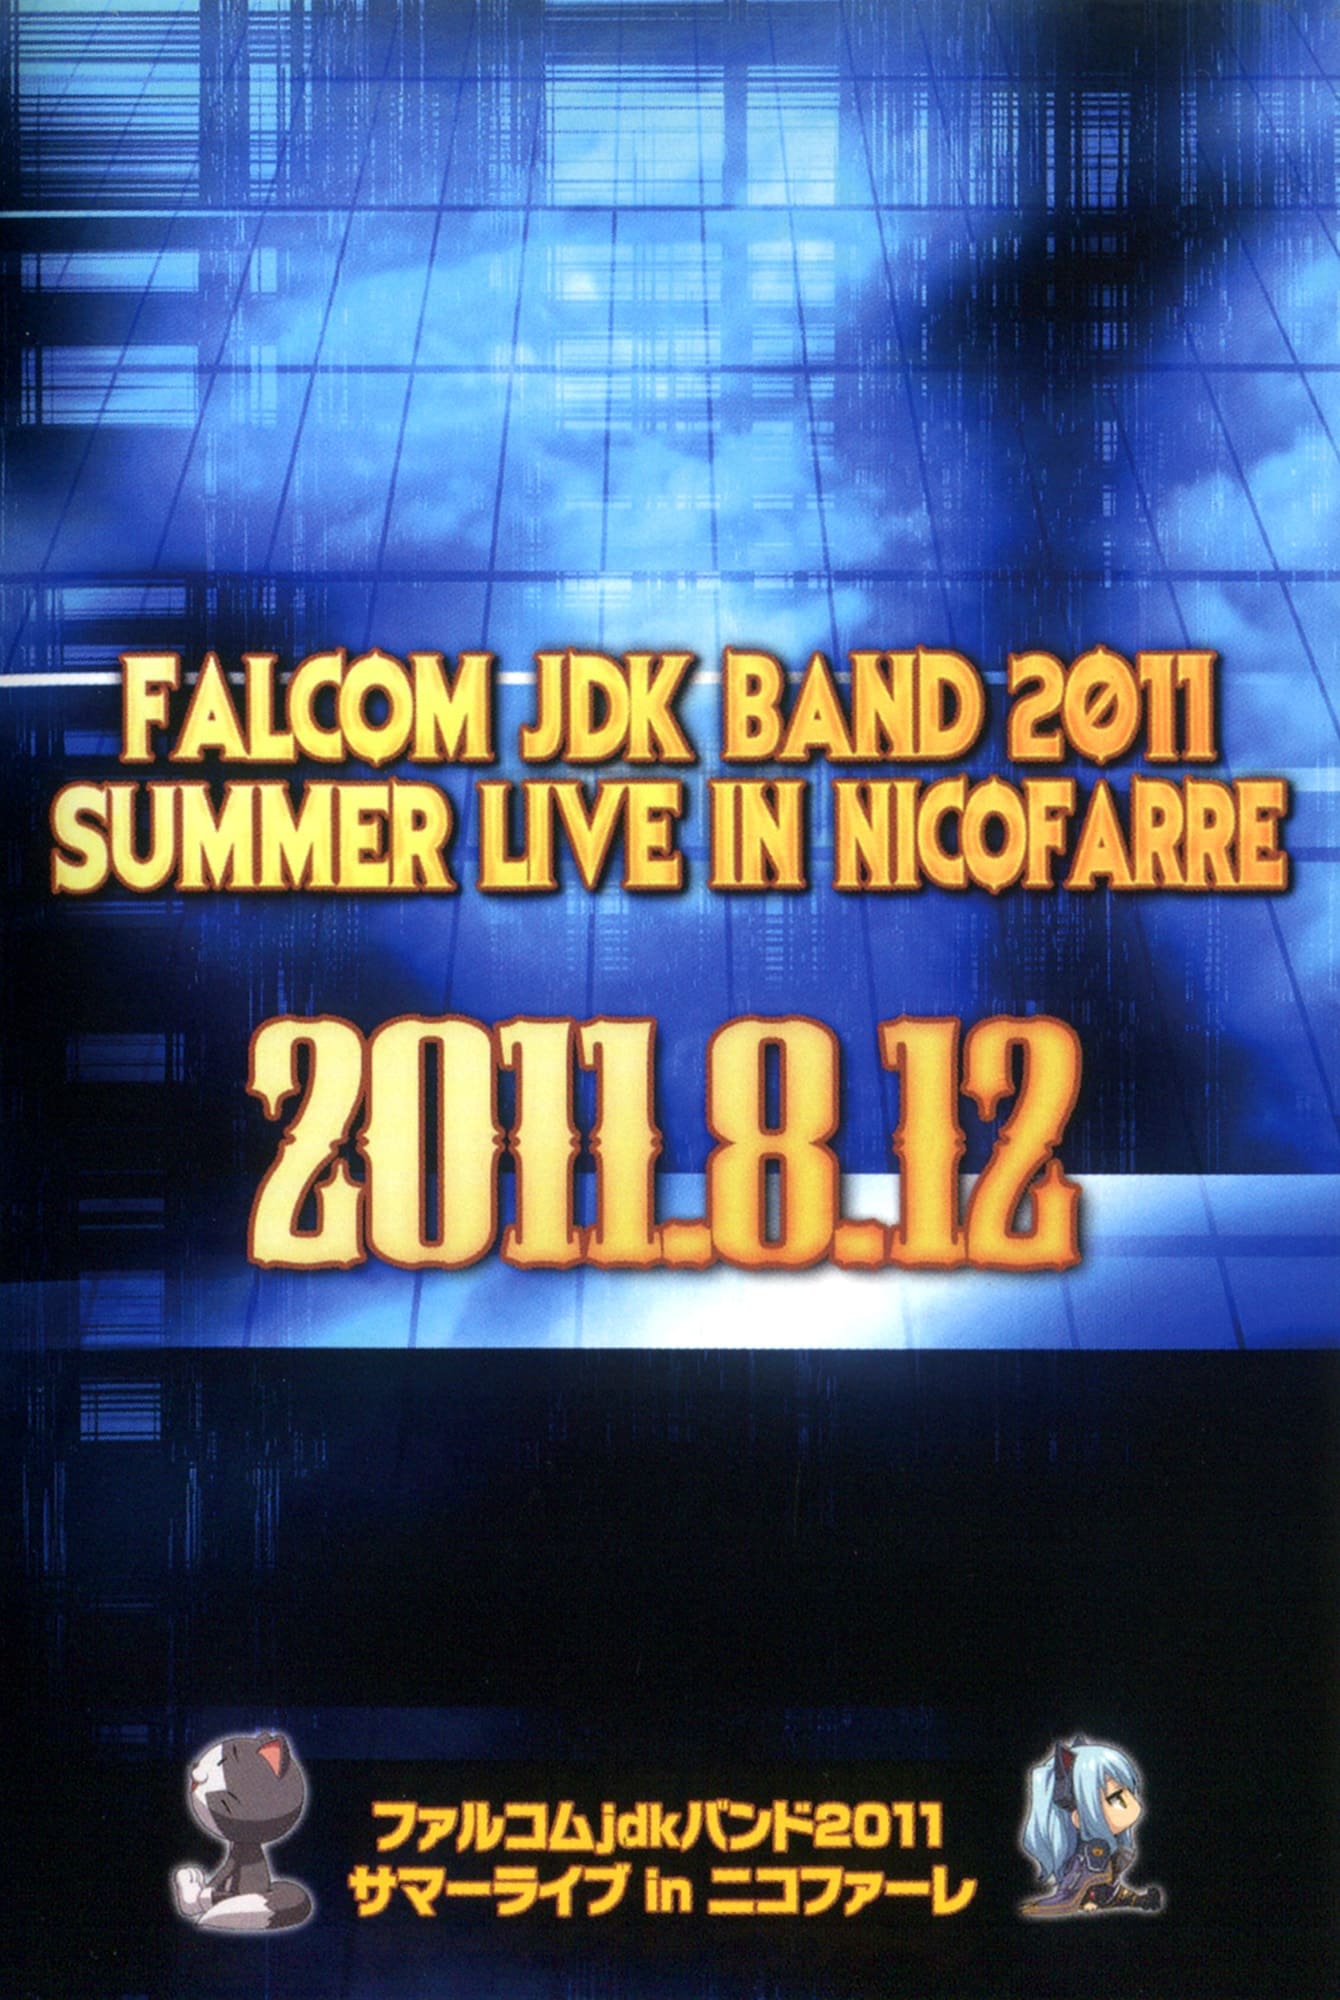 Falcom jdk Band 2011 Summer Live in Nicofarre